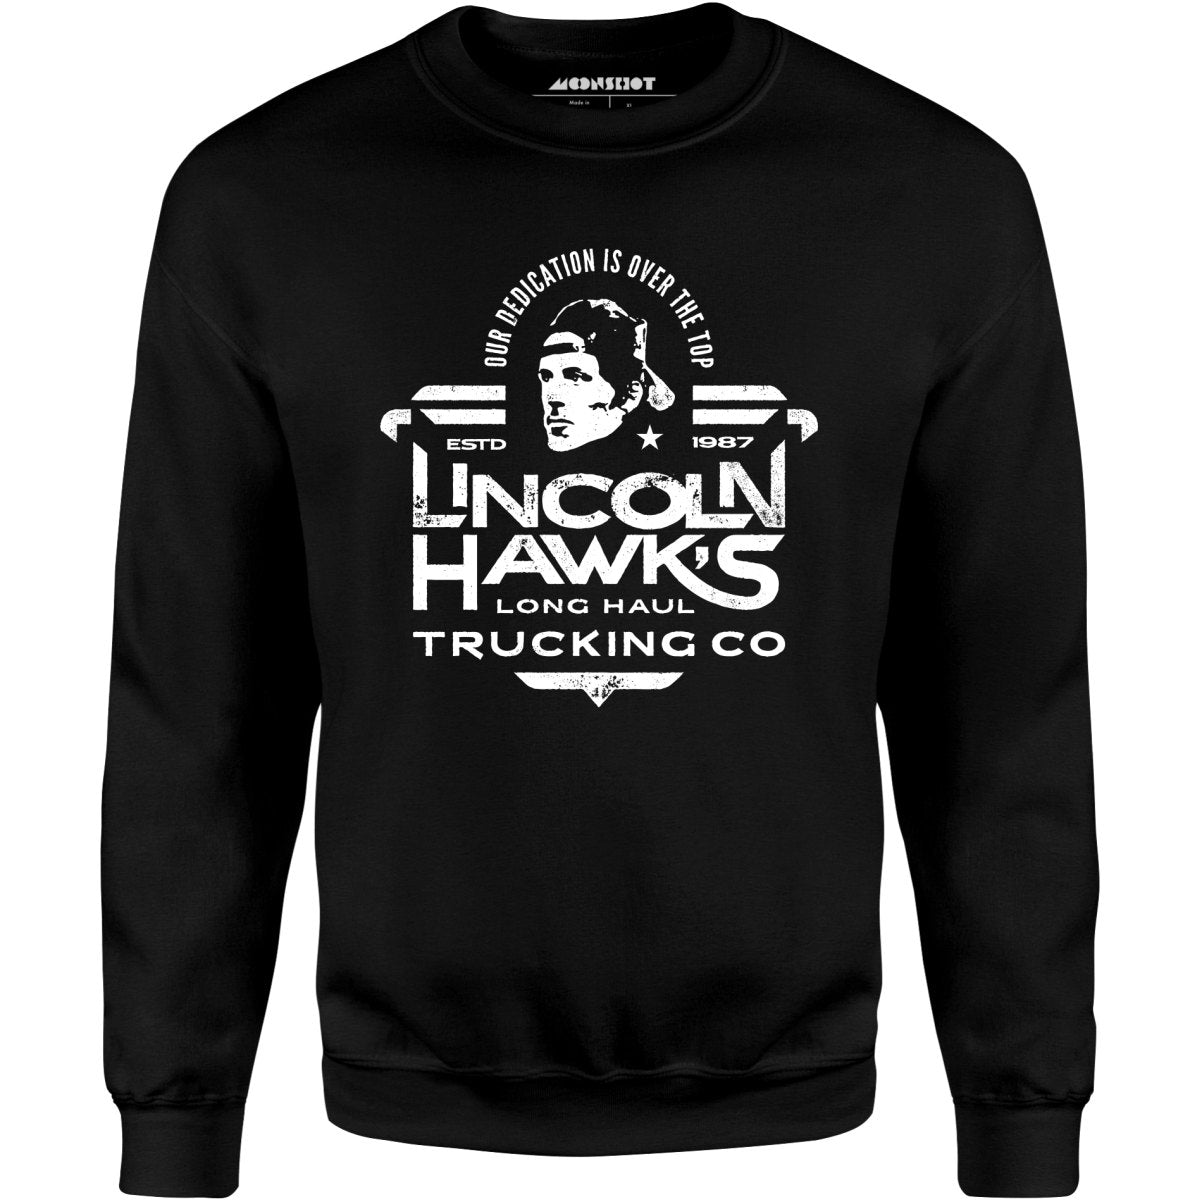 Lincoln Hawk's Trucking Co. - Unisex Sweatshirt